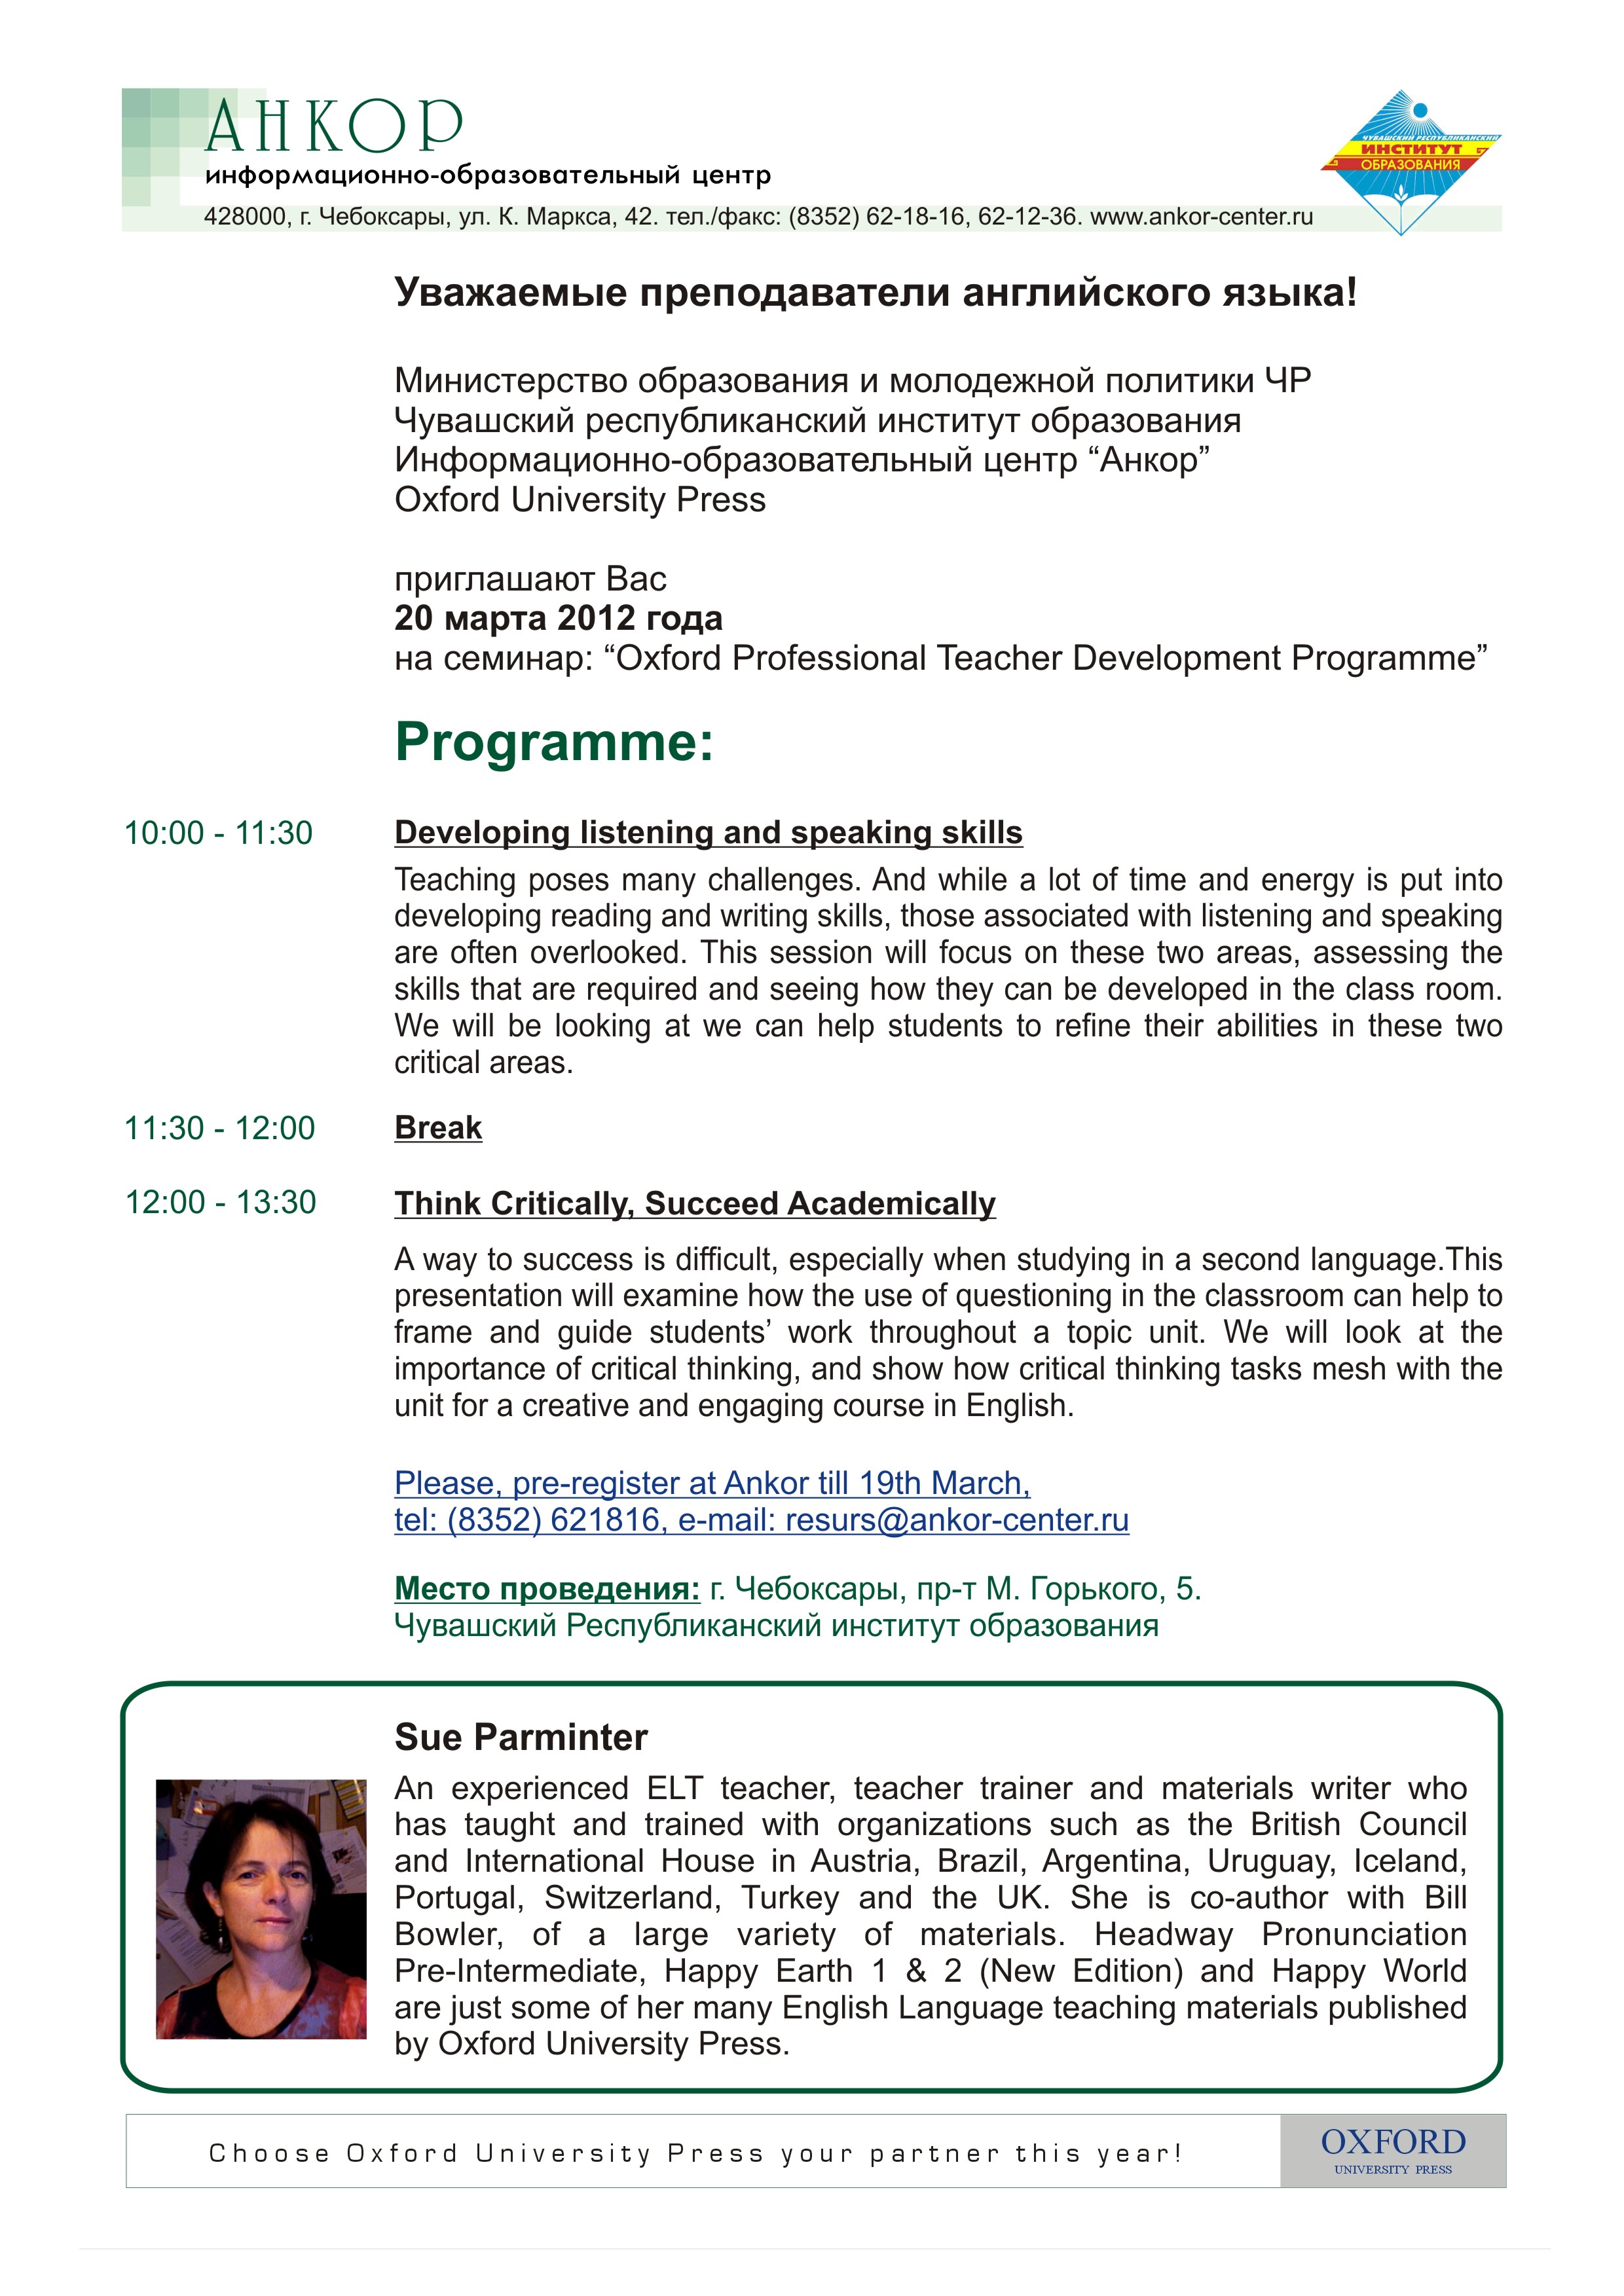 Очередной семинар из цикла «Oxford Professional Teacher Development Programme»